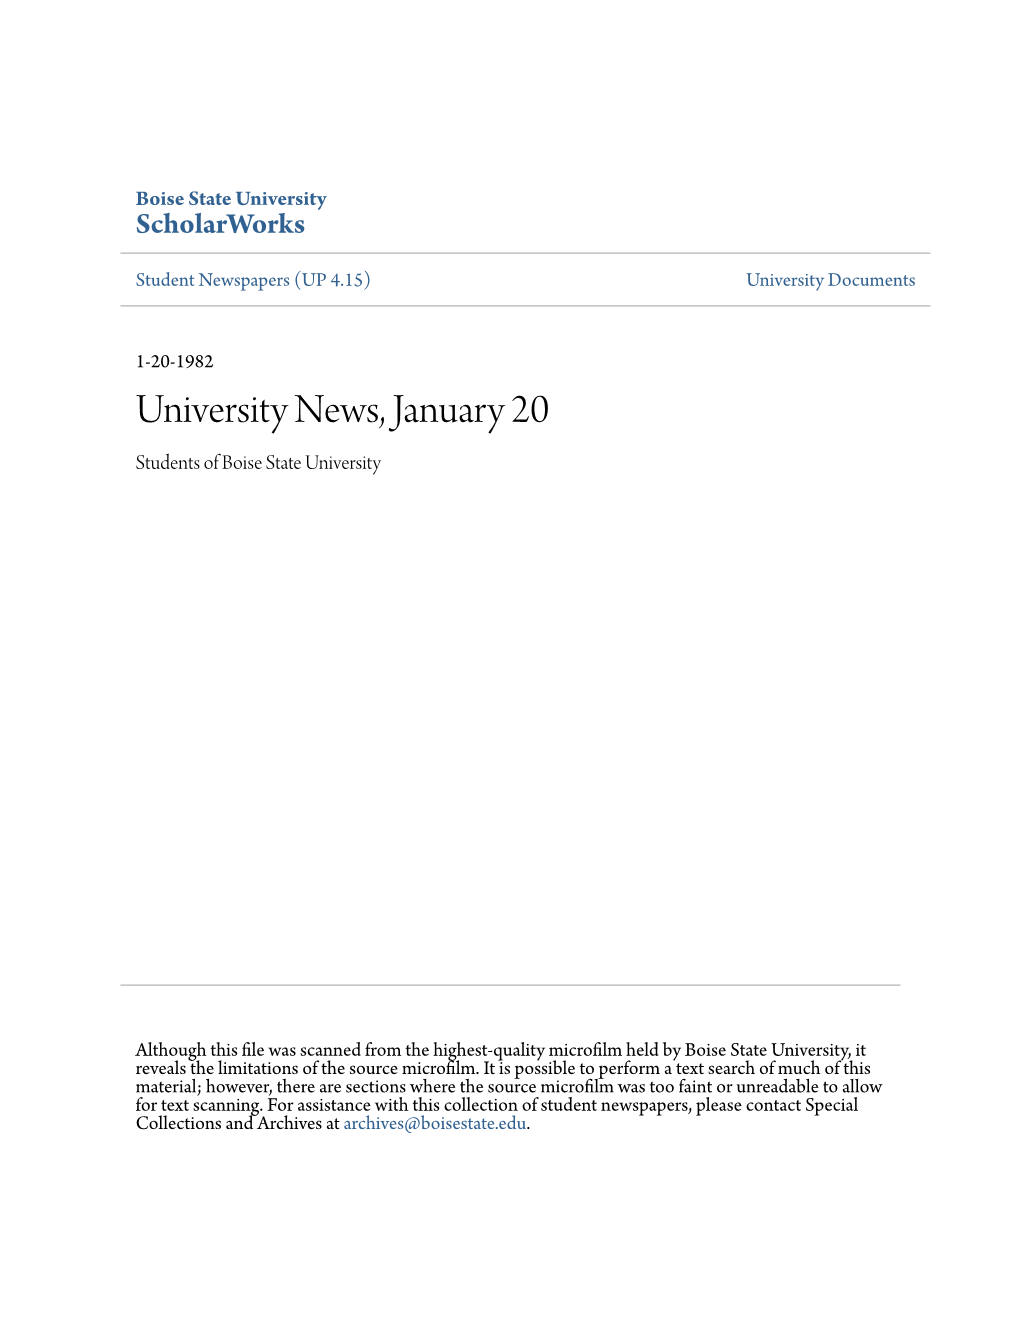 University News, January 20 Students of Boise State University